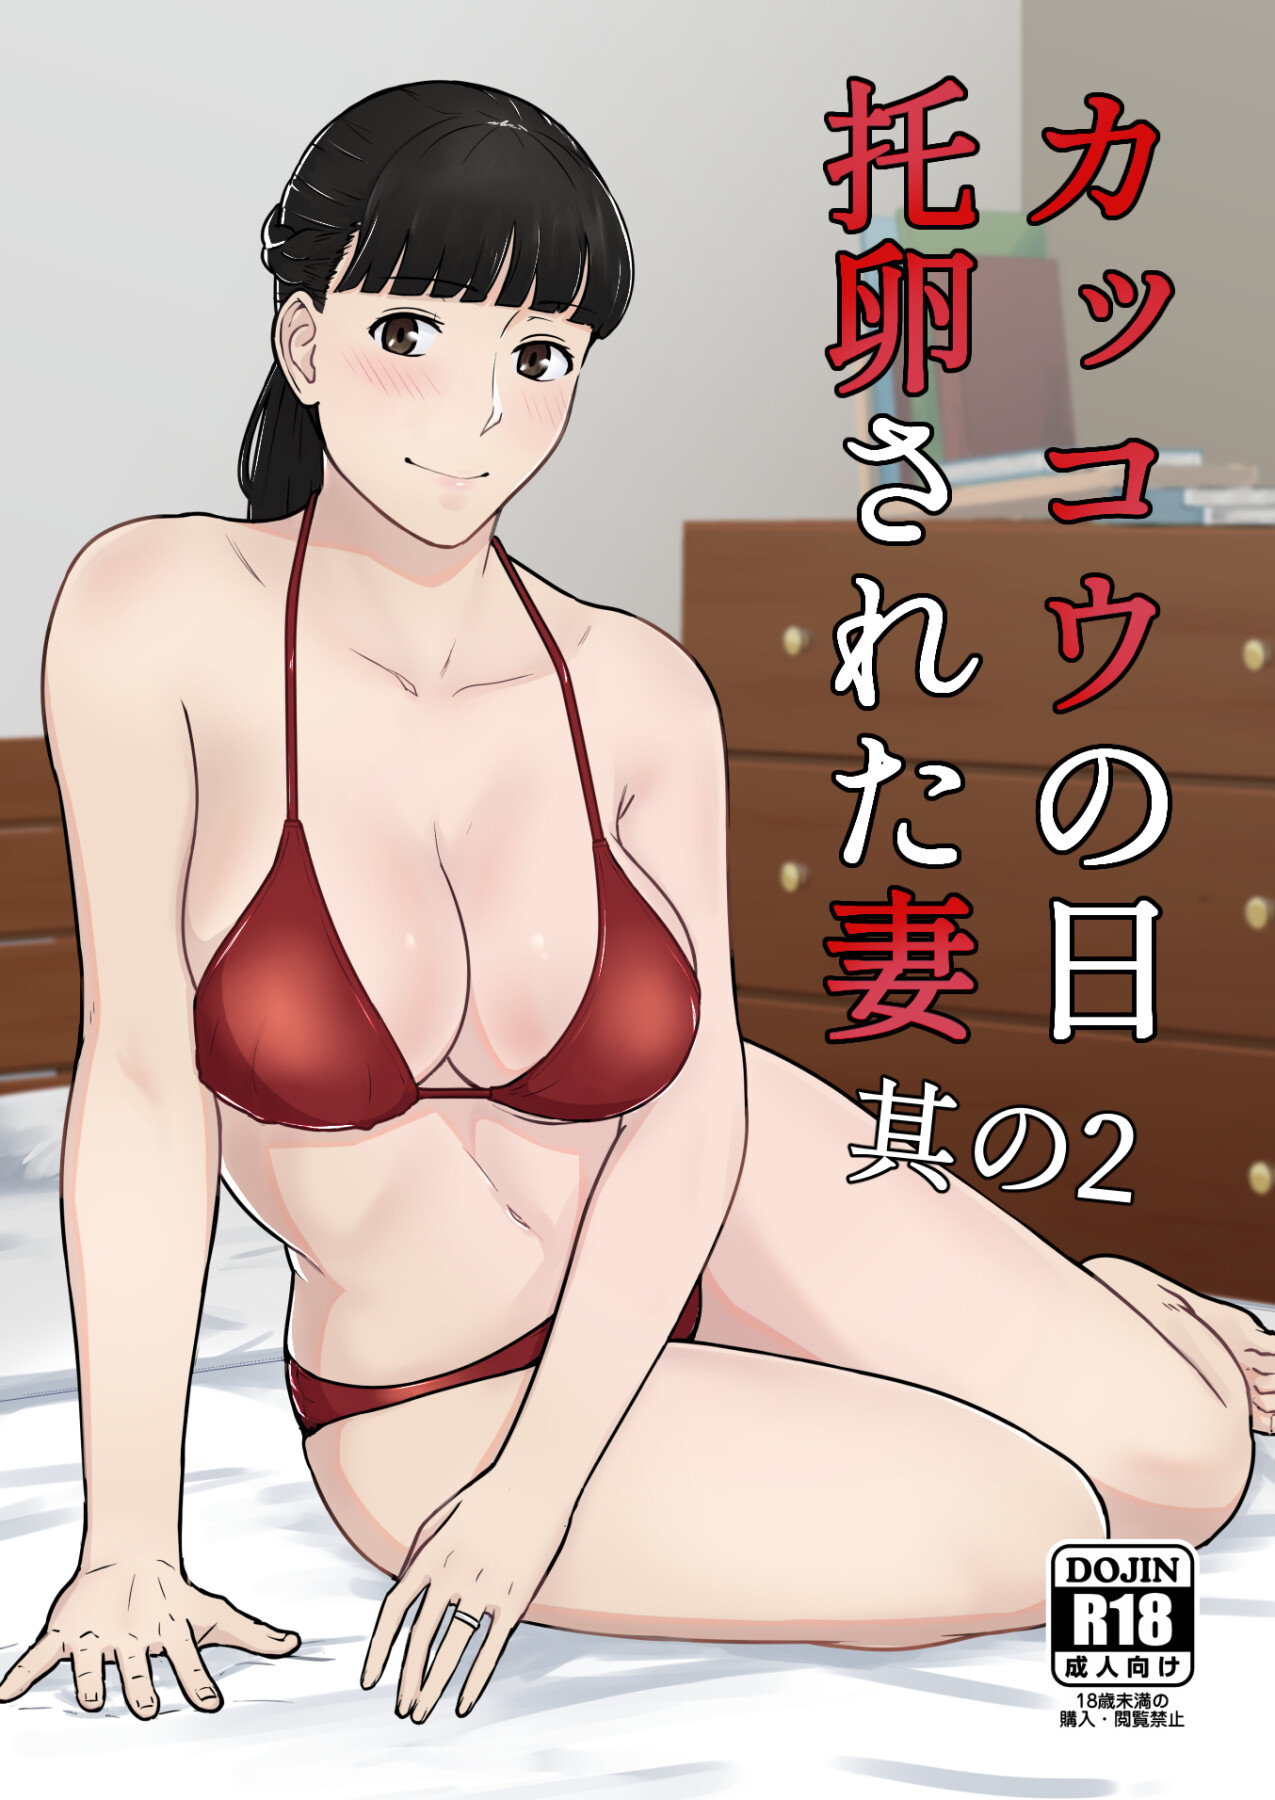 Hentai Manga Comic-A Usual Workday -My Wife's Secrets- 2-Read-1